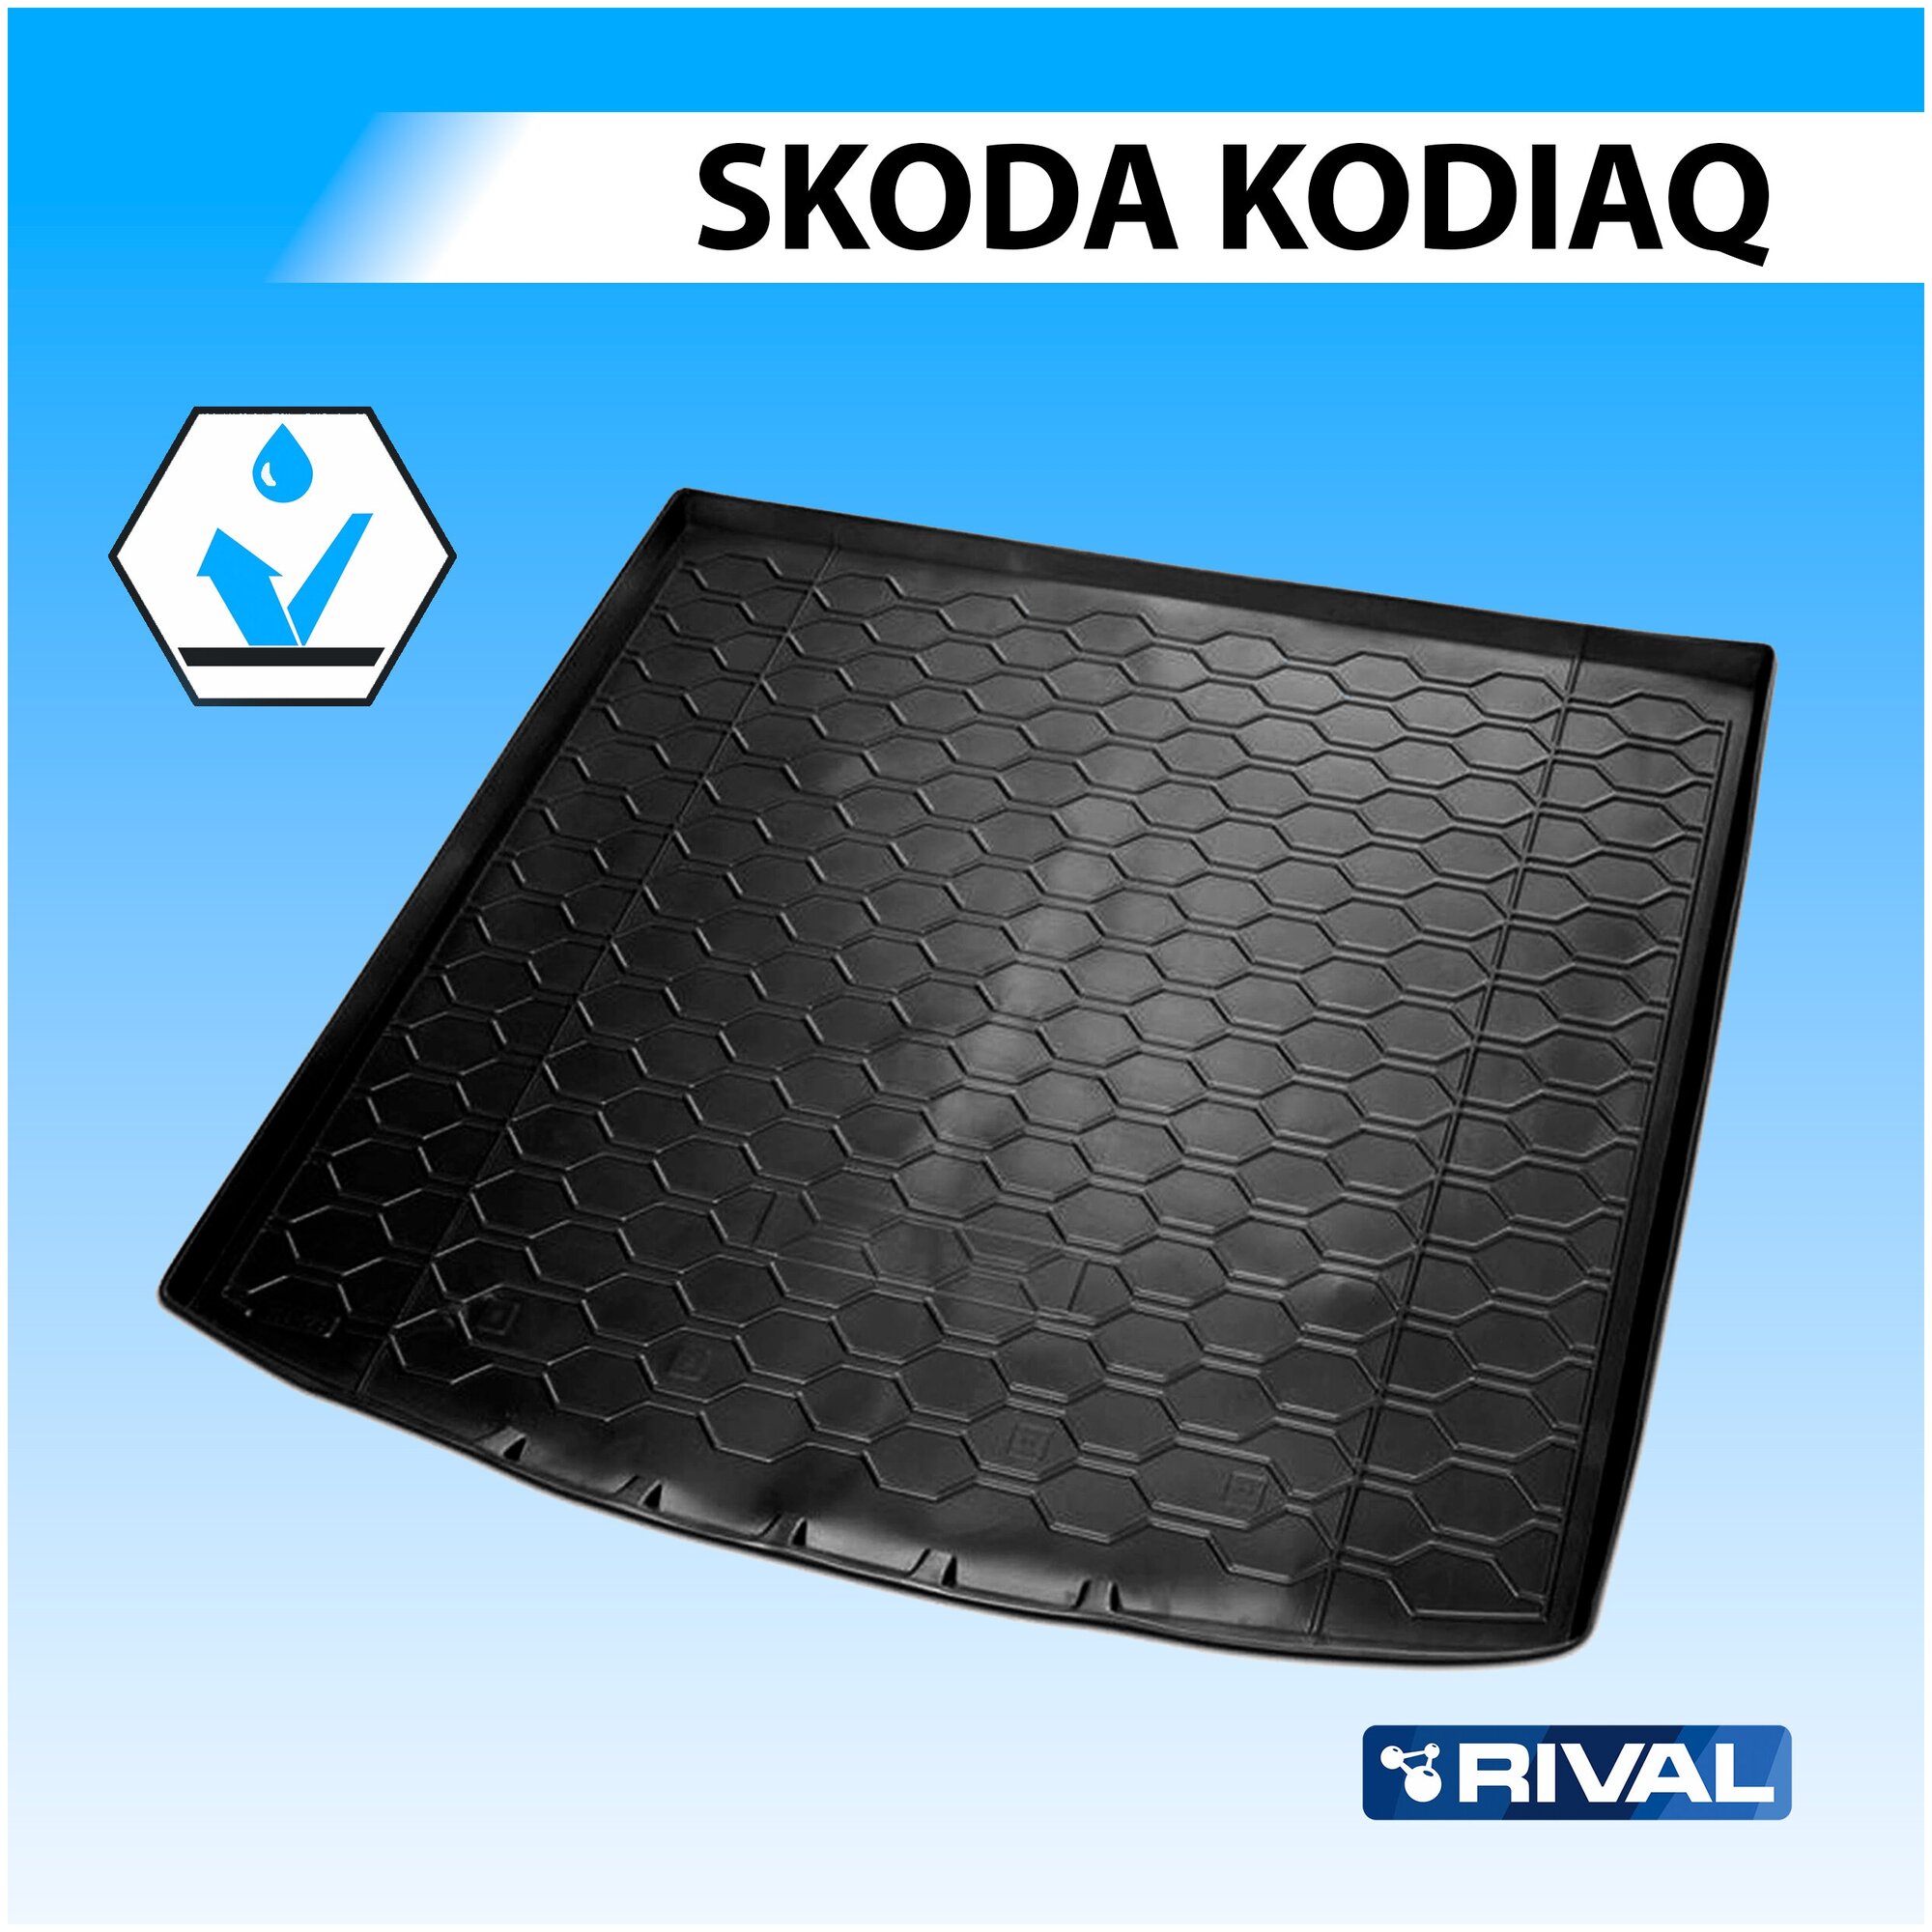 Коврик в багажник RIVAL 15105002 для Skoda Kodiaq с 2017 г.